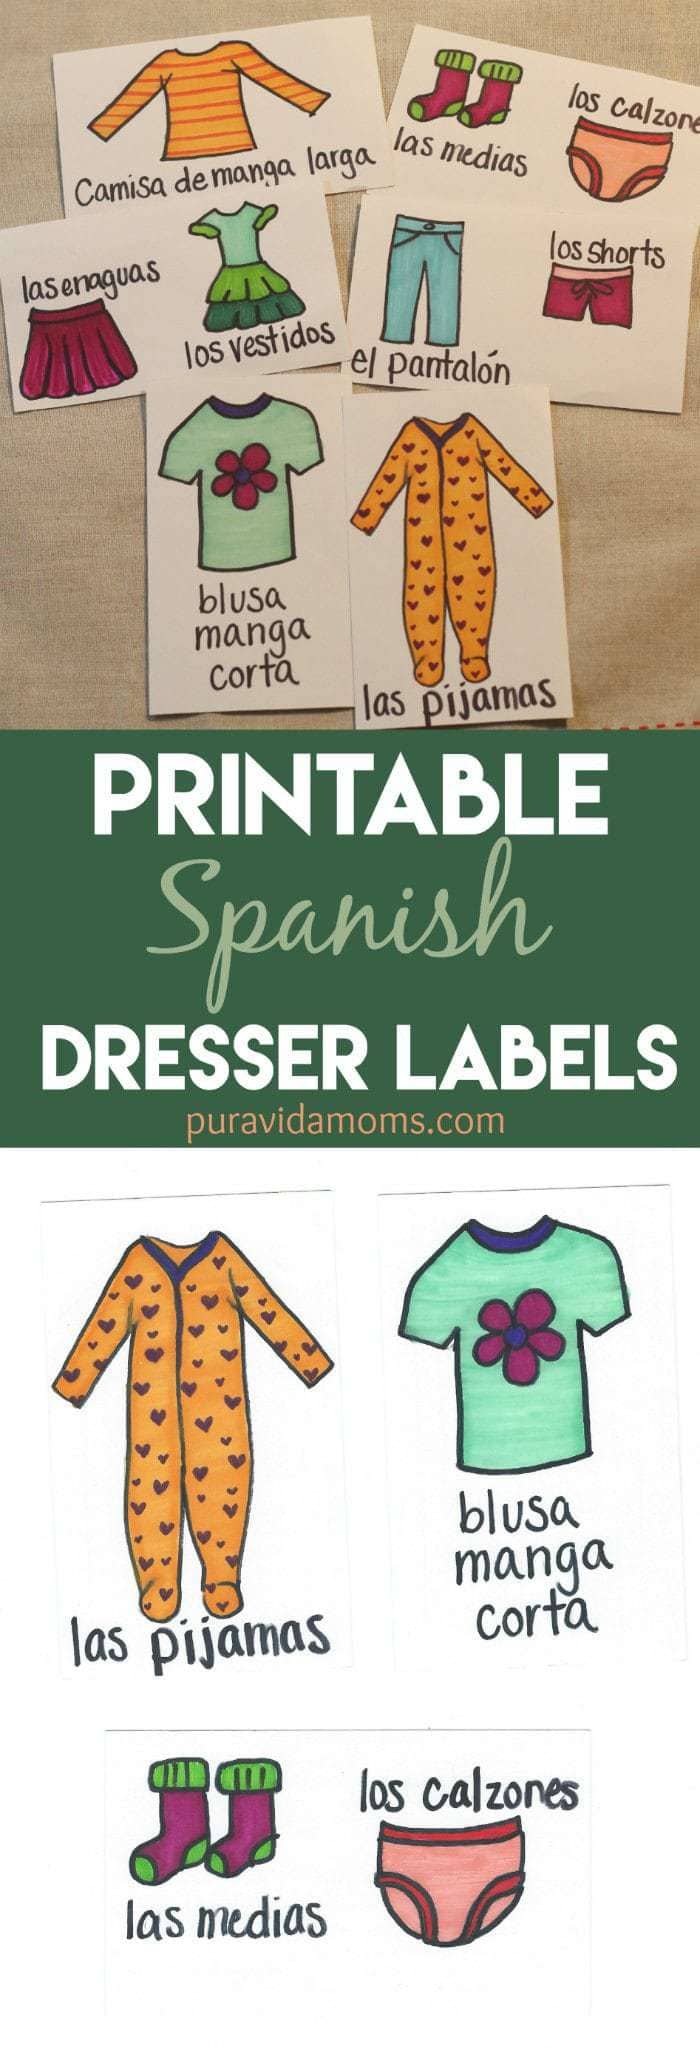 Spanish Dresser Drawer Labels Printable